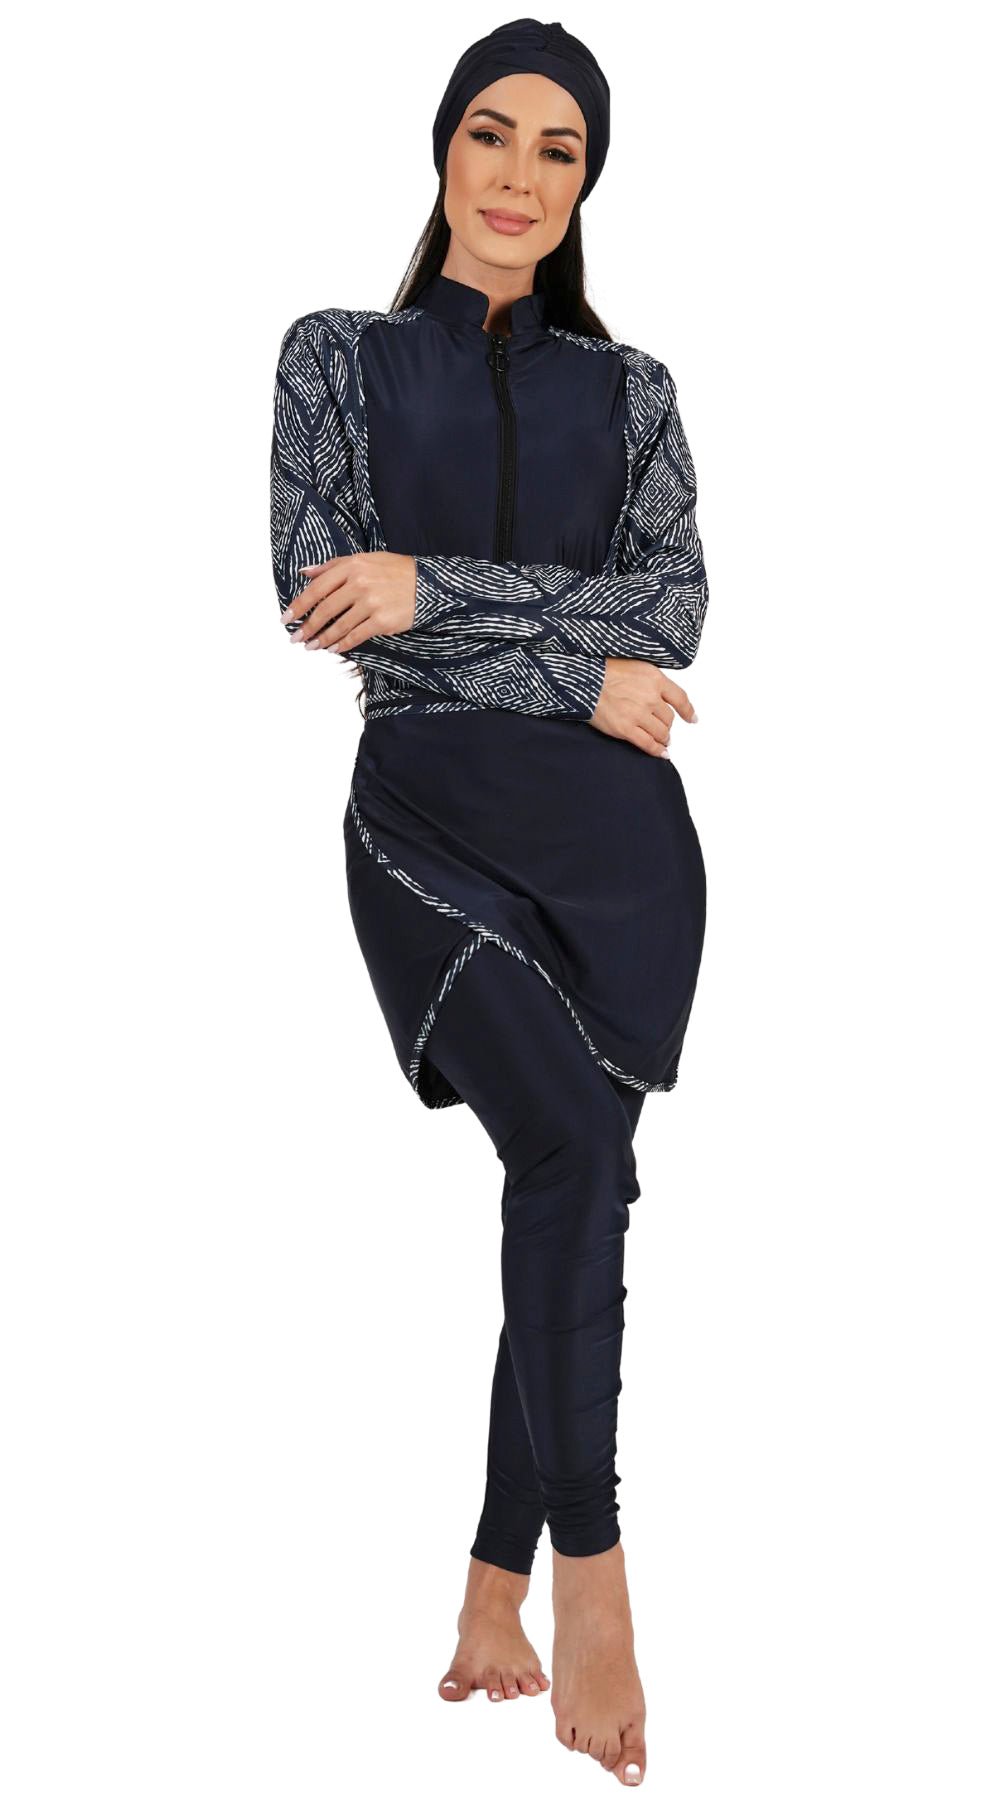 Essentials 4-Piece Full Coverage Printed Burkini Set (Navy) - Bare Essentials
Modest Islamic Swimsuit